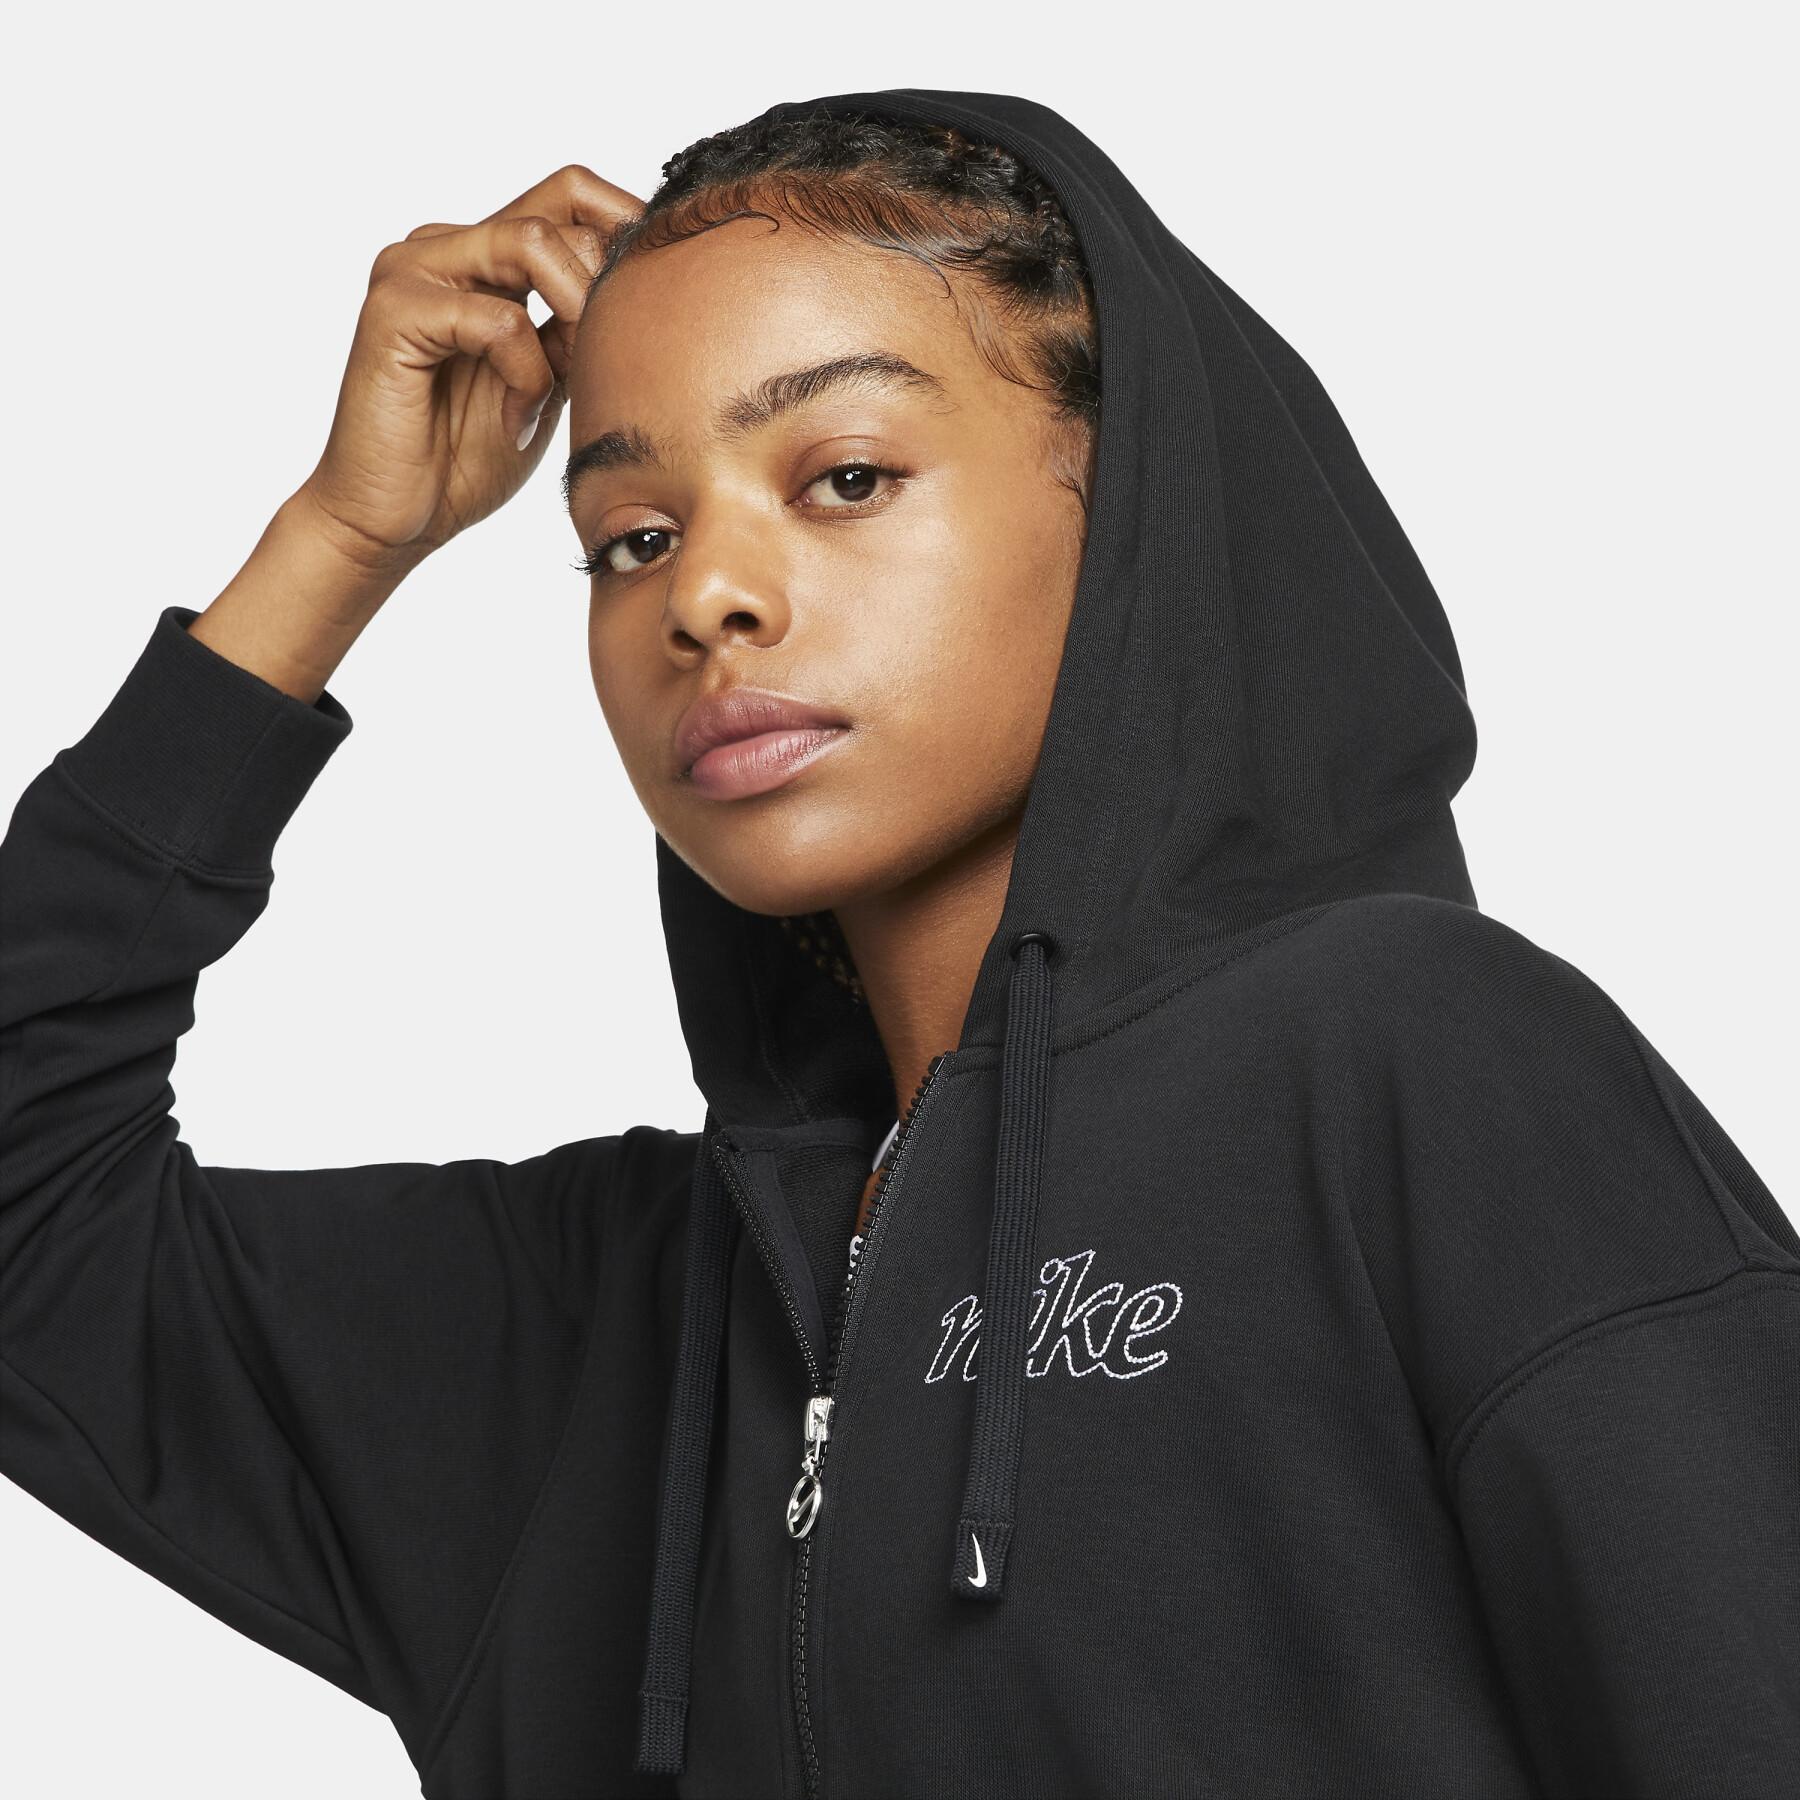 Sweatshirt cremallera con capucha para mujer Nike Dri-Fit Get Fit Graphic